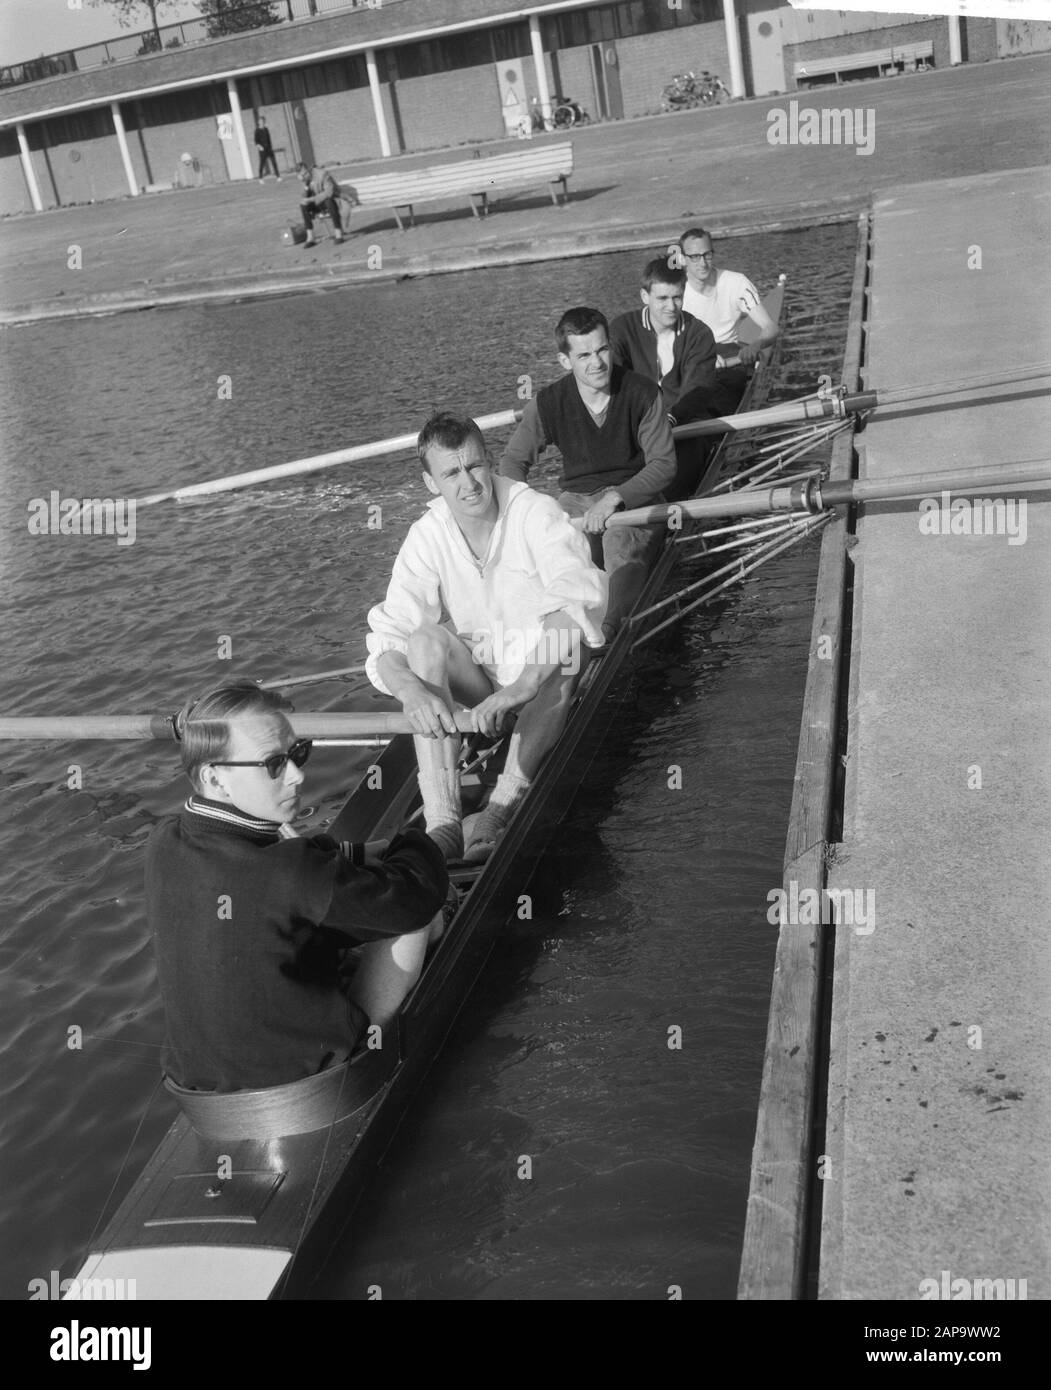 The old Four of Nereus training, v.v.n.a. mate A. J. Strobosch, battle S. T. Castelein, S. J. Blaisse S. Wartena, bow J. J. Gmekan Meyking Date: May 20, 1964 Keywords: rowing Personal name: A. J. Strobosch, J.J. Gmekan Meyking, S. T. Castelein, S. Wartena Institution name: Nereus Stock Photo